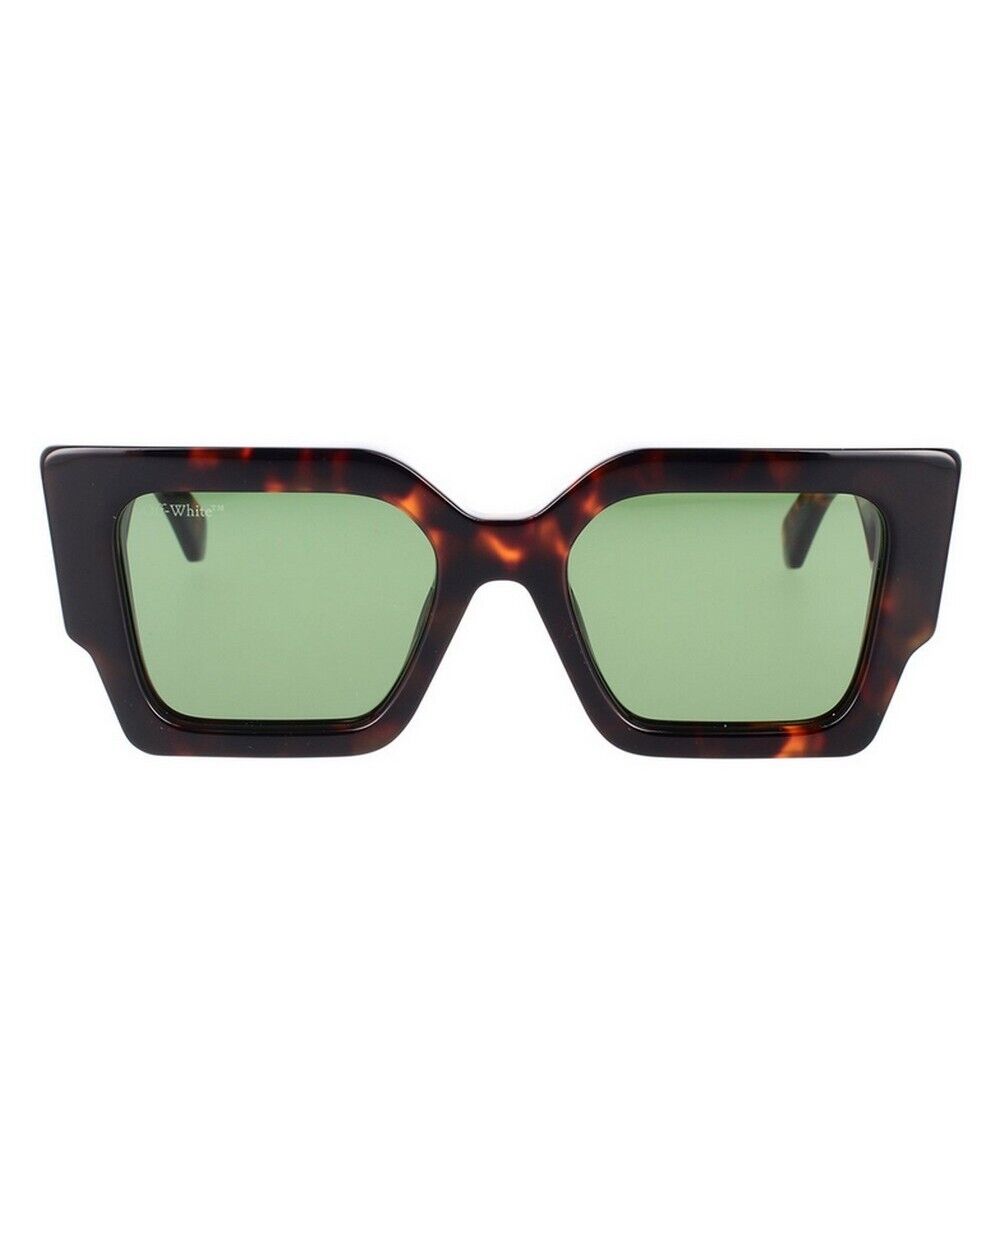 Off-White Catalina Havana Green 55mm New Sunglasses